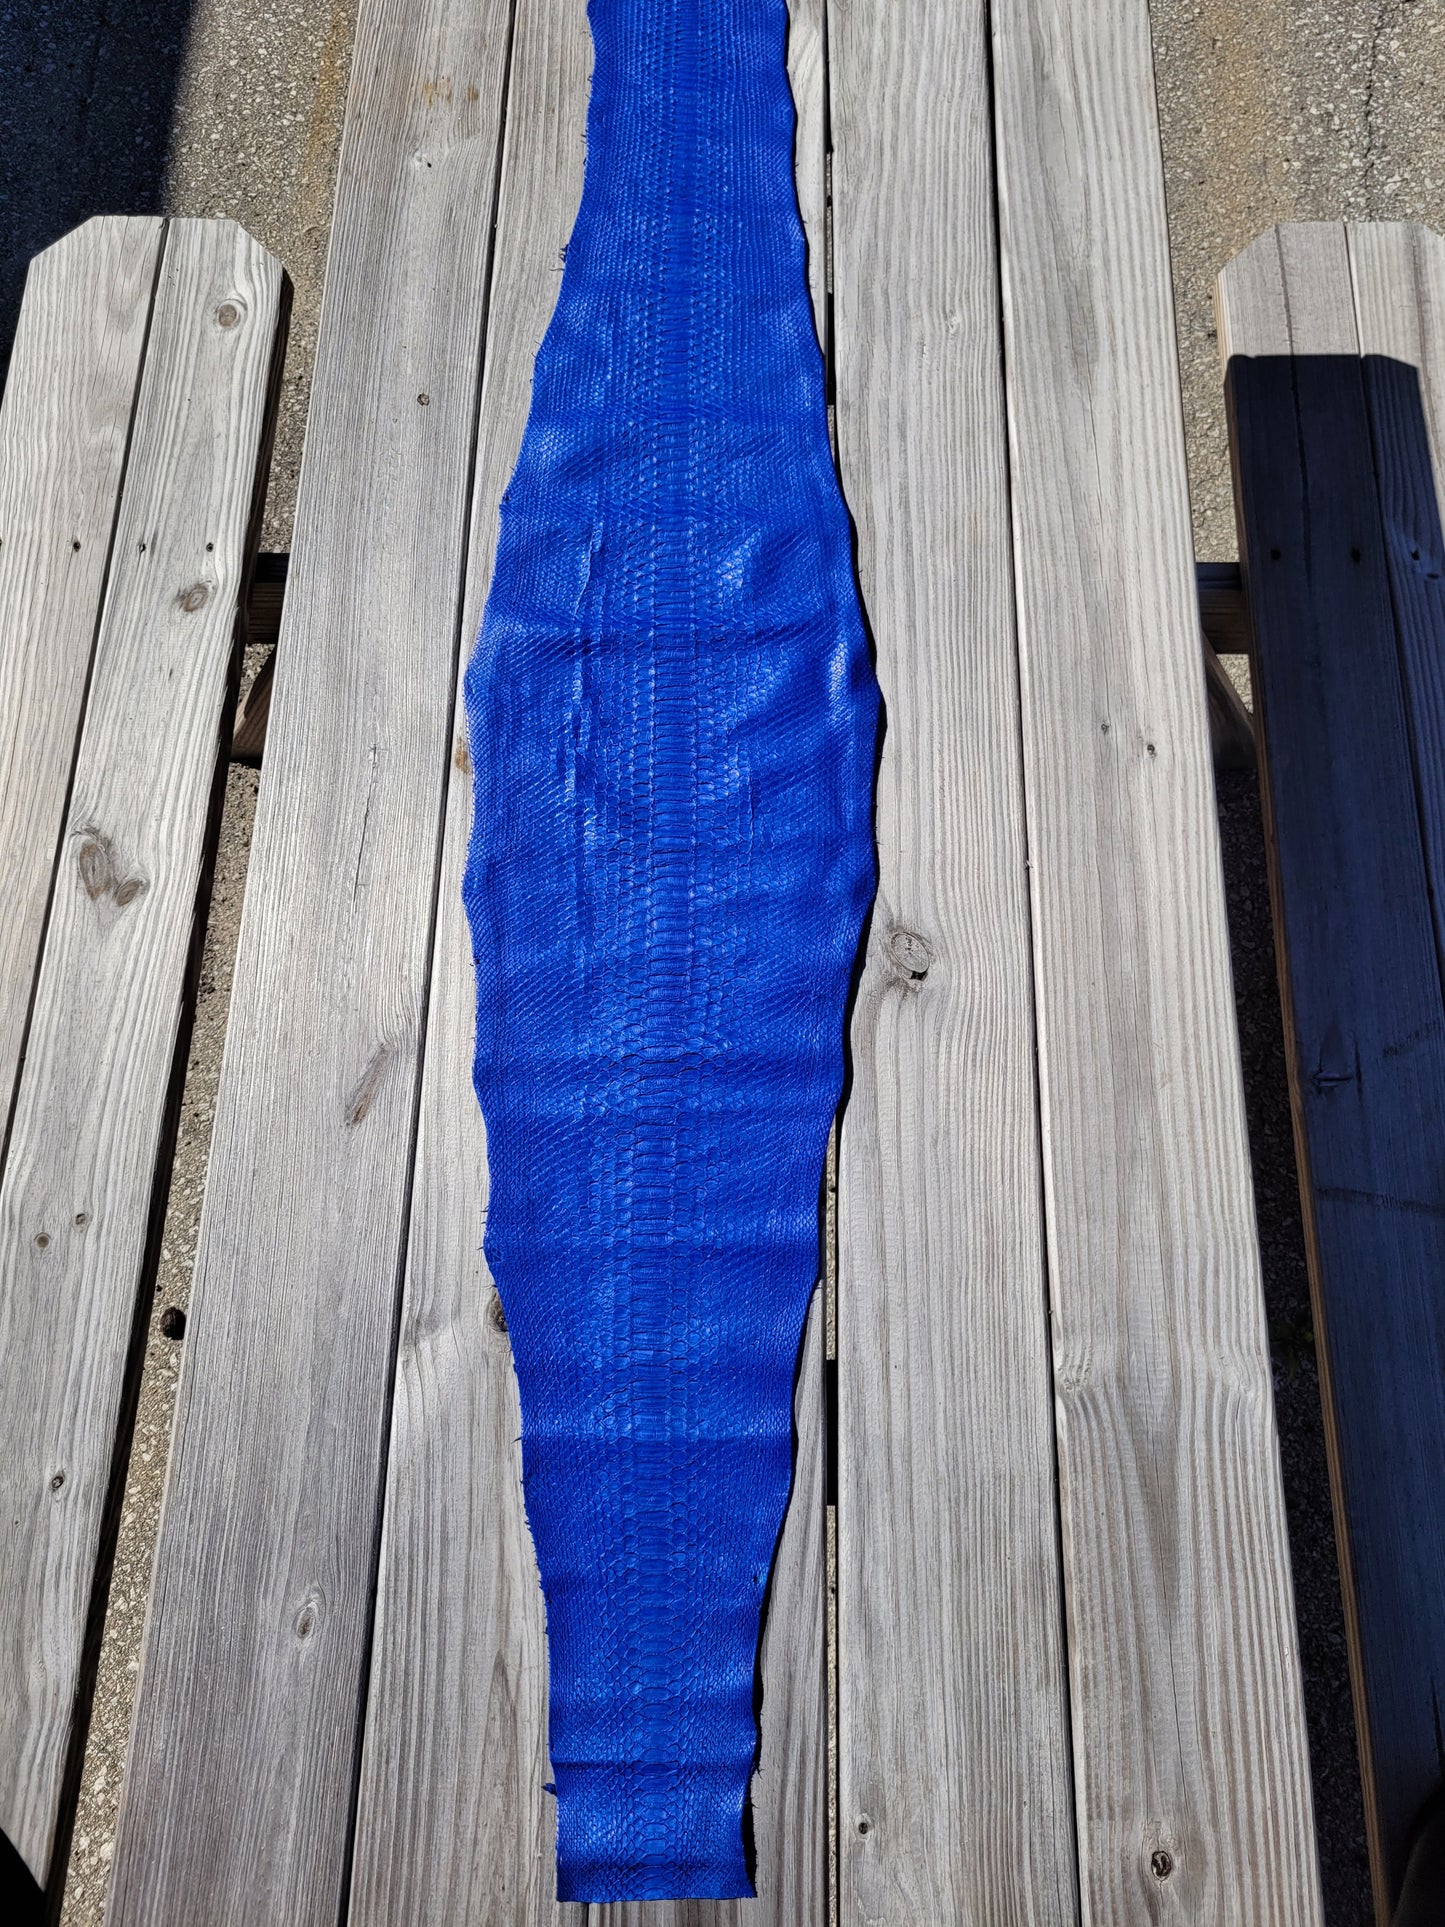 Python Skin - 1.54m - Grade 1 Cobalt Blue (Matte)